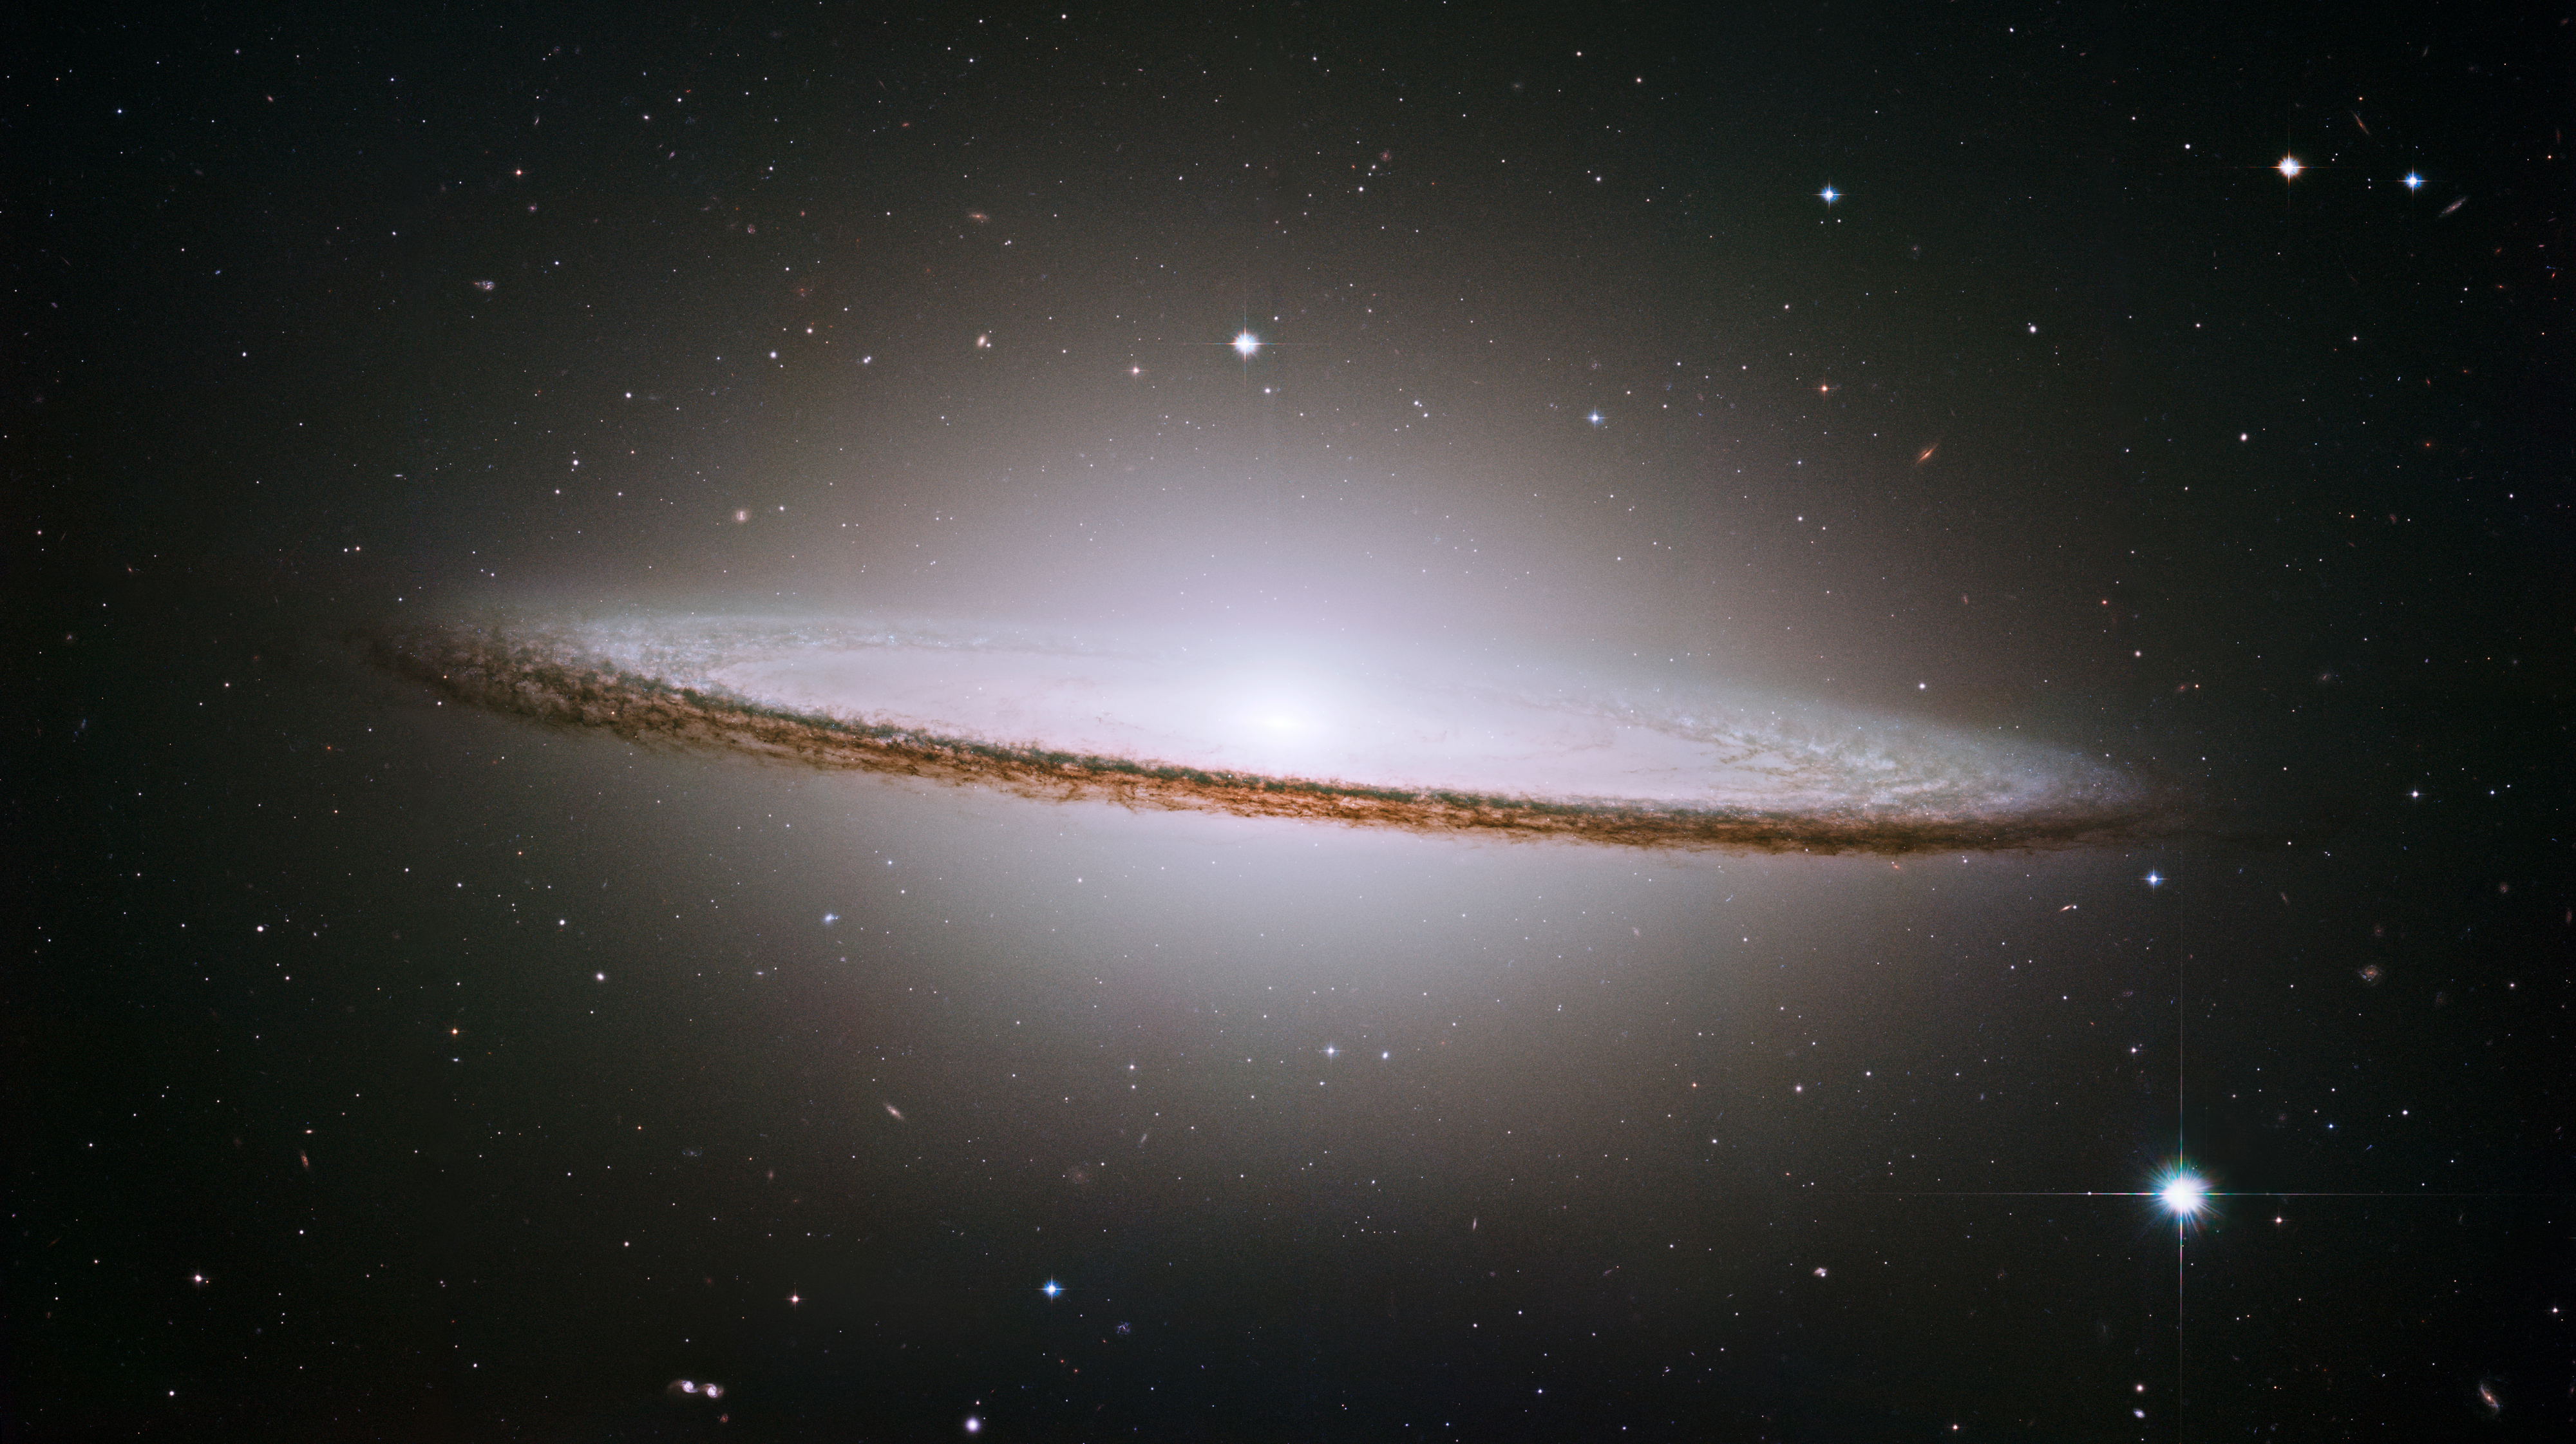 Image Archive: Galaxies | ESA/Hubble